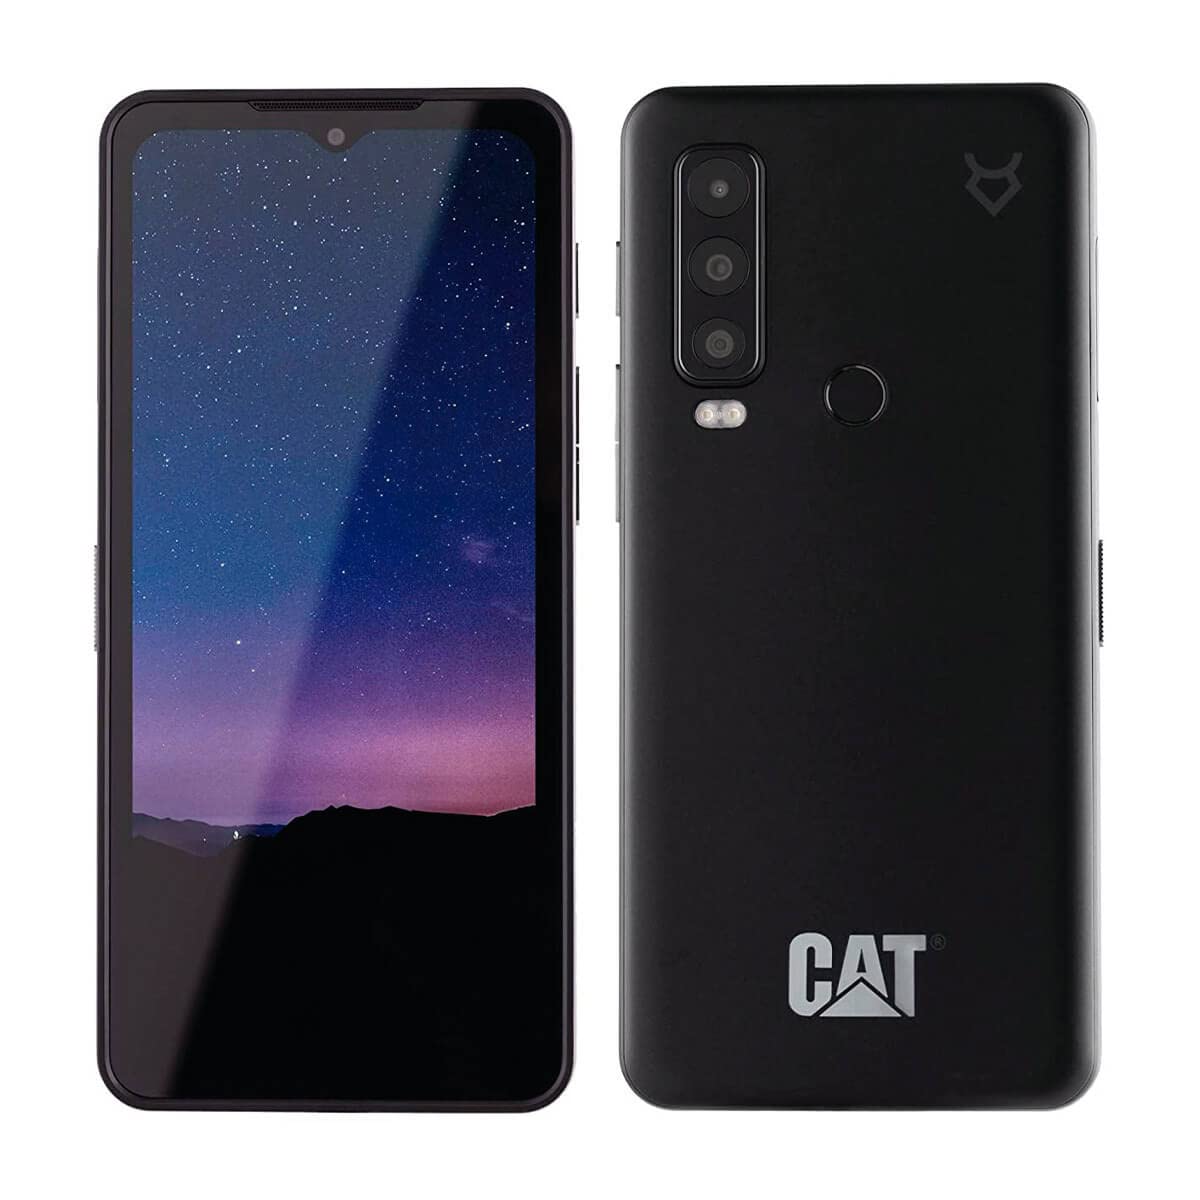 CAT S75 Smartphone Model EU/UK Model BM1S1B w/Satellite Connection Dual SIM Factory Unlocked International Version - Black